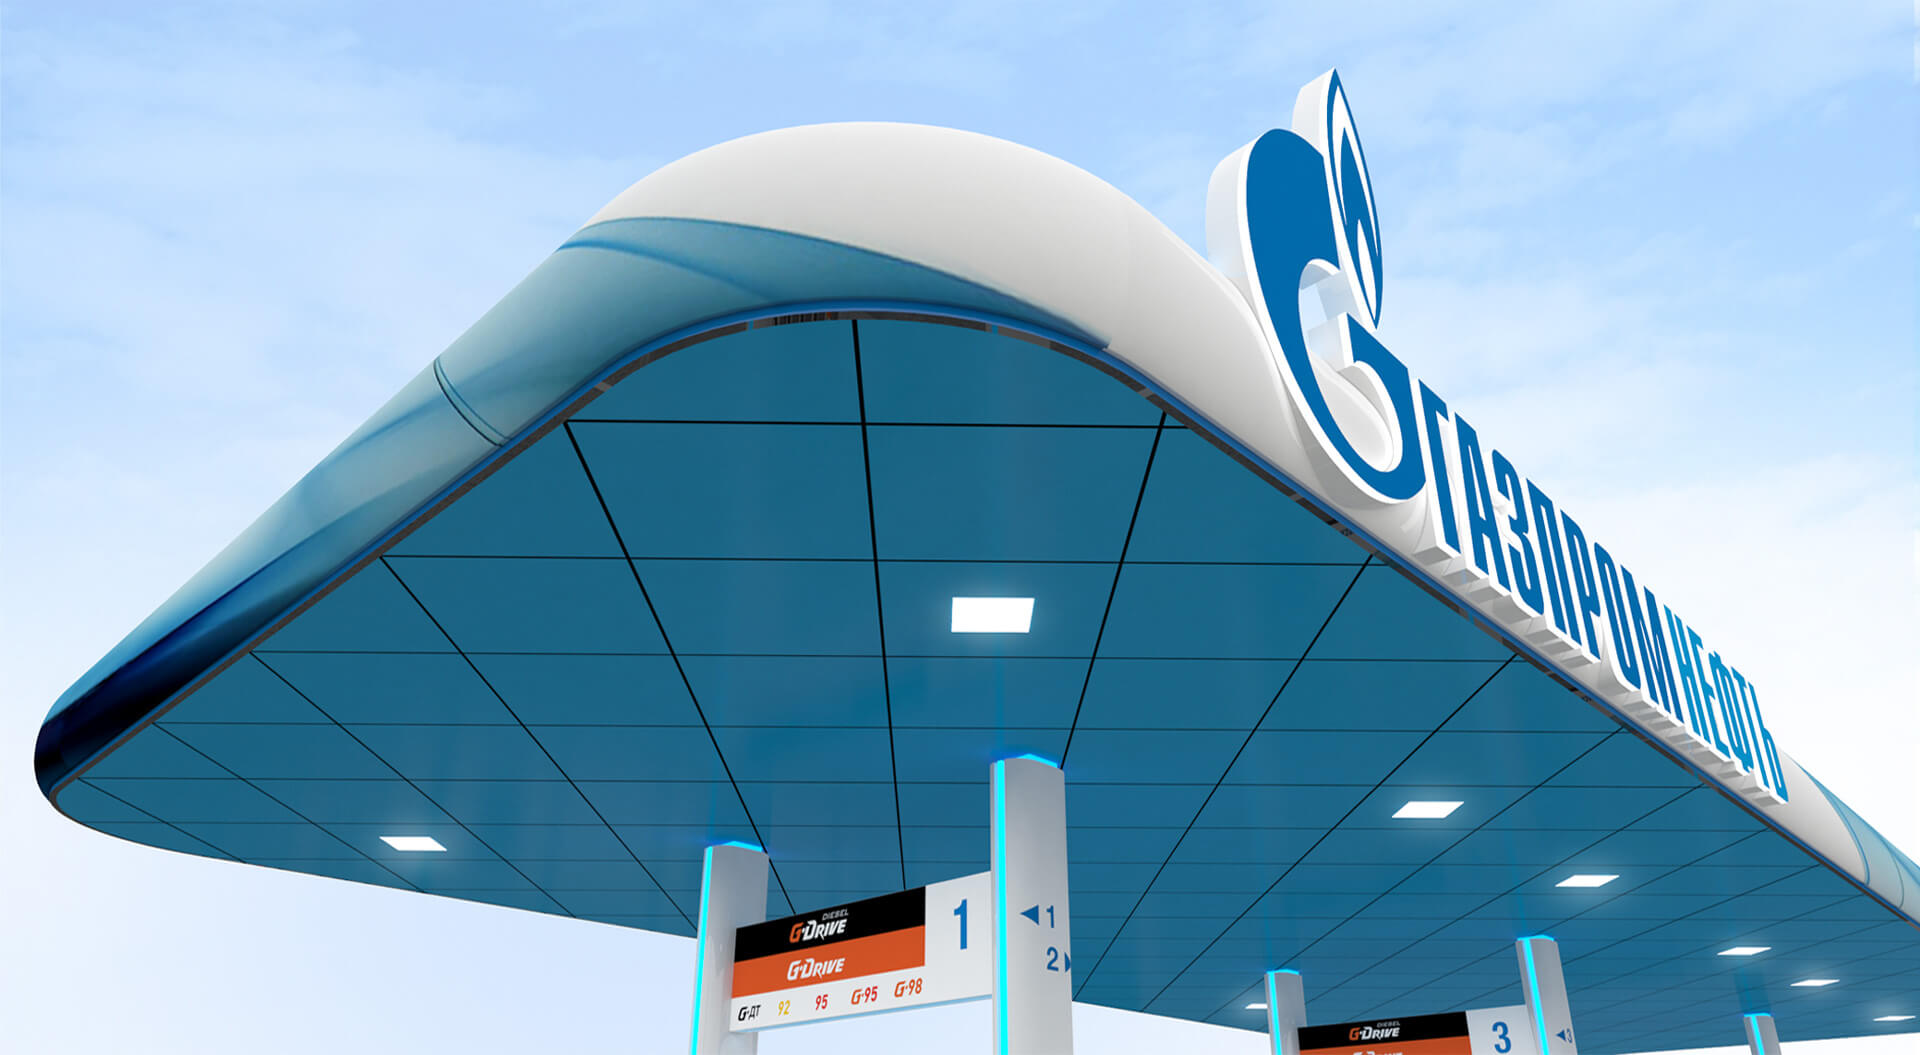 Gazprom Neft Russia petrol filling station Retail interior store design, branding, concepts, ideas